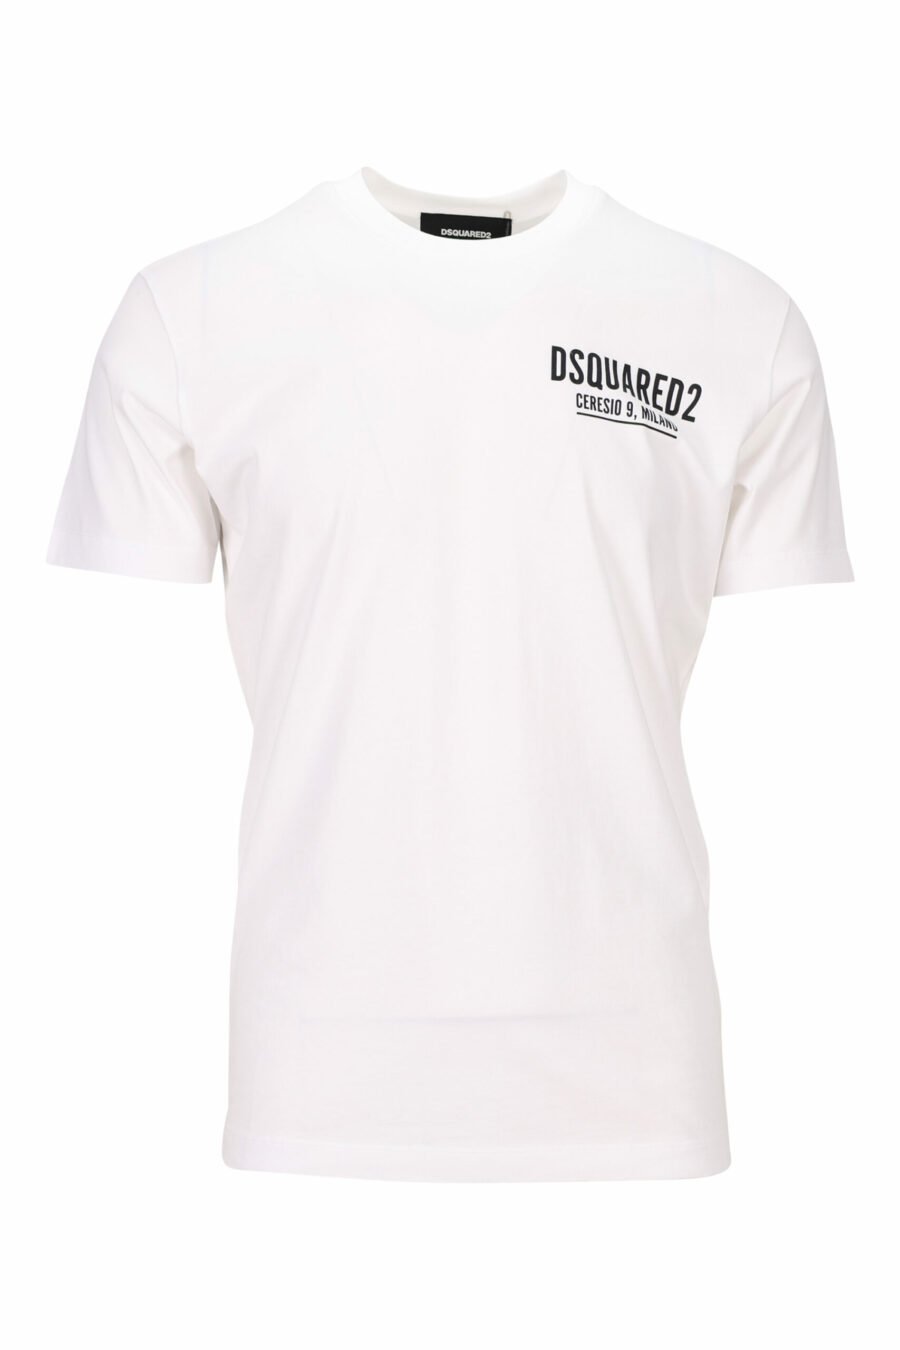 T-shirt blanc avec minilogo "ceresio 9, milano" - 8054148505059 scaled